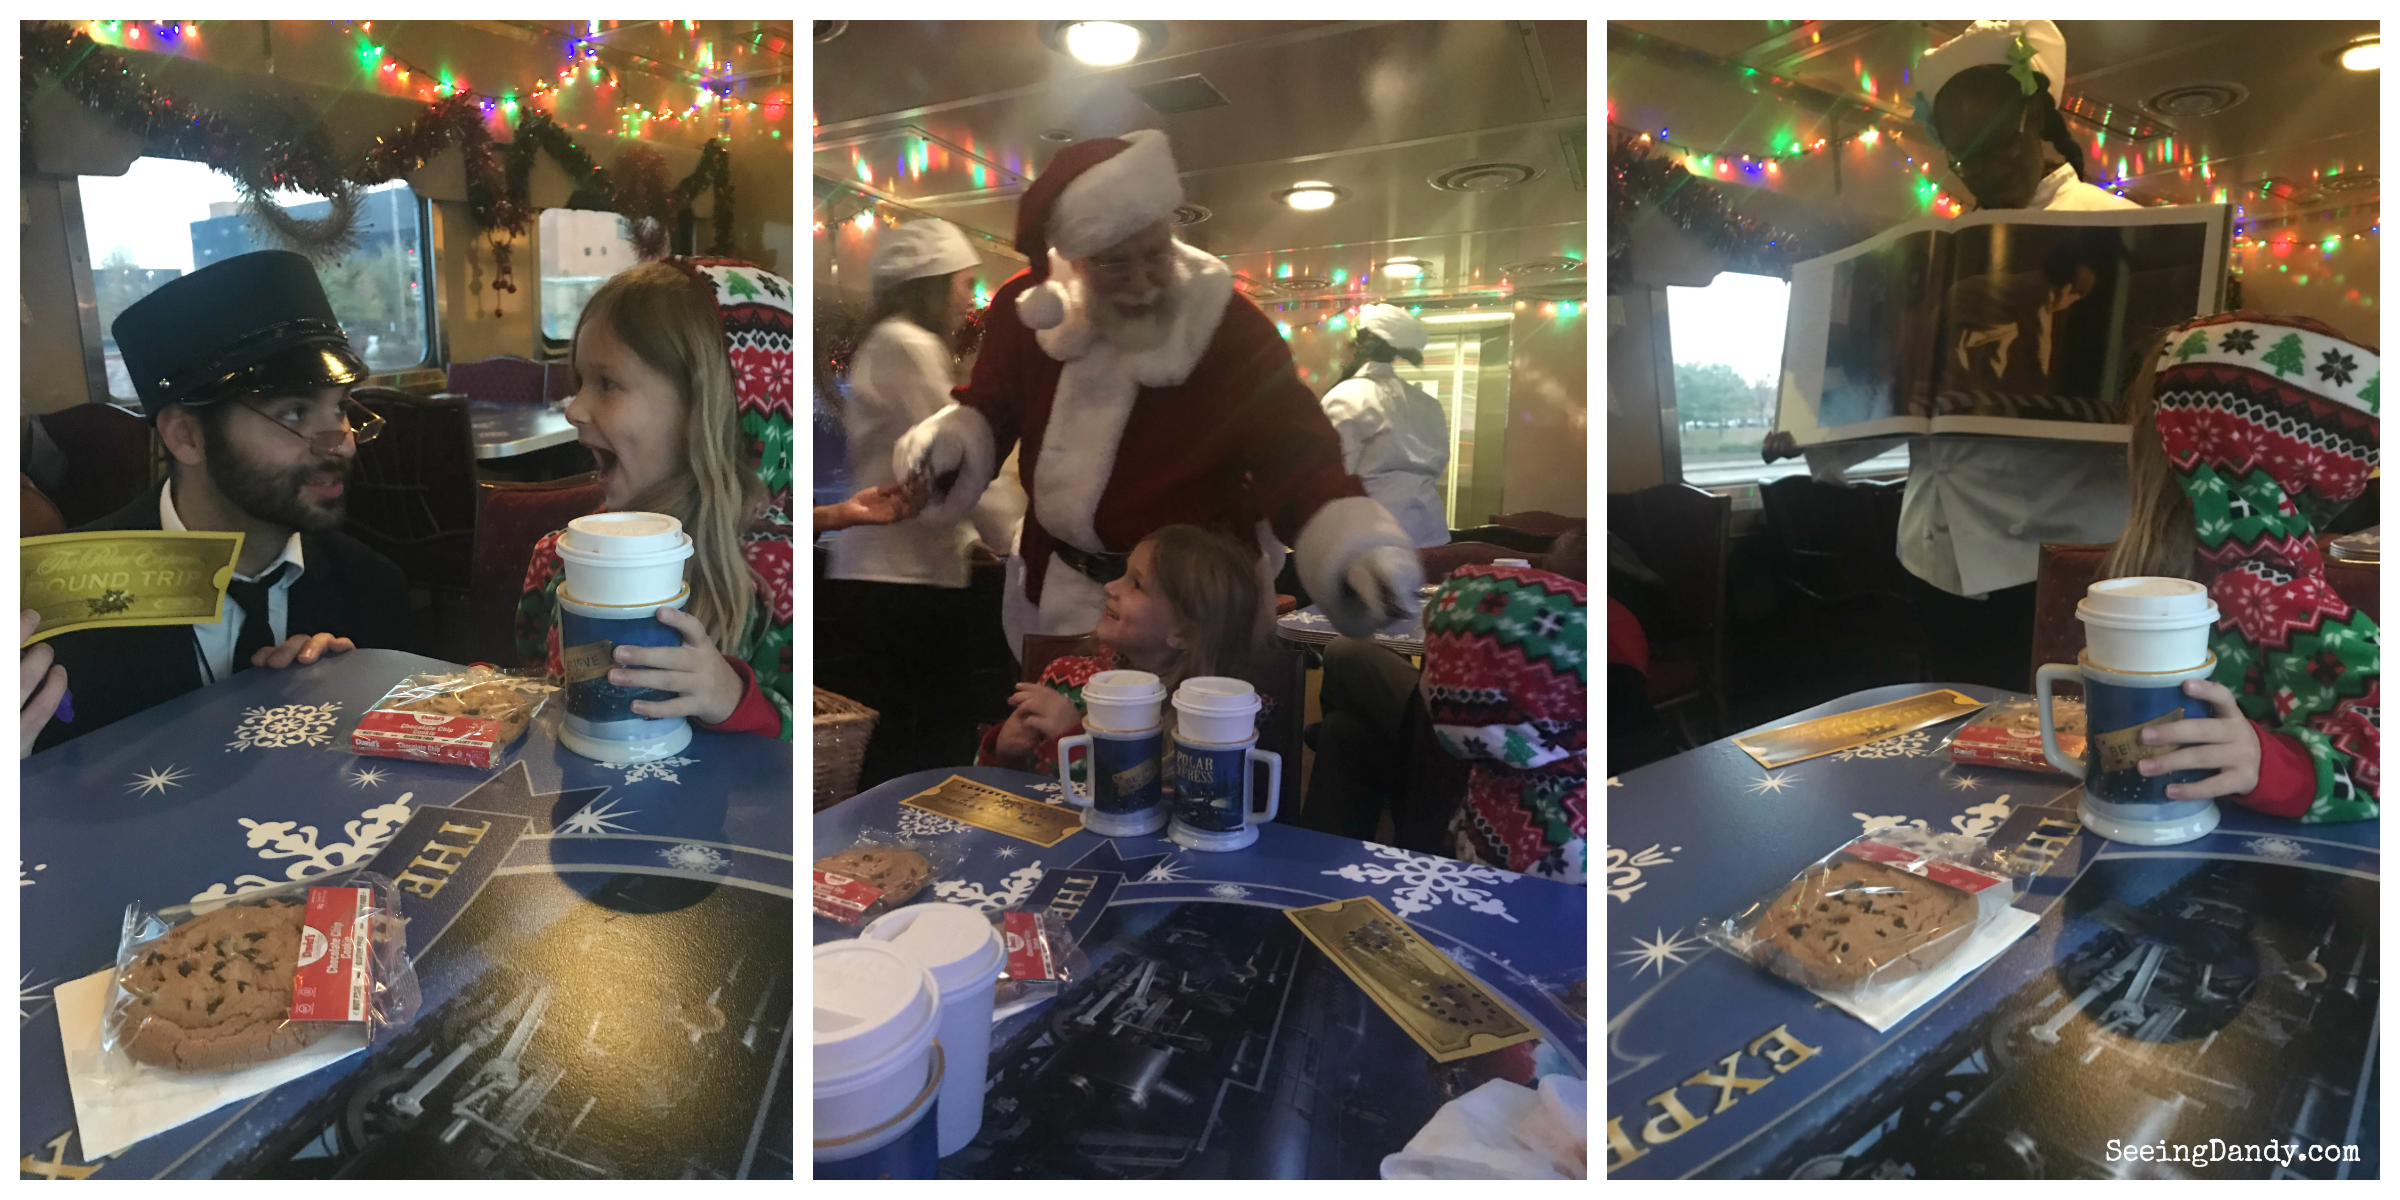 Union Station Polar Express conductor, Santa, and storybook.